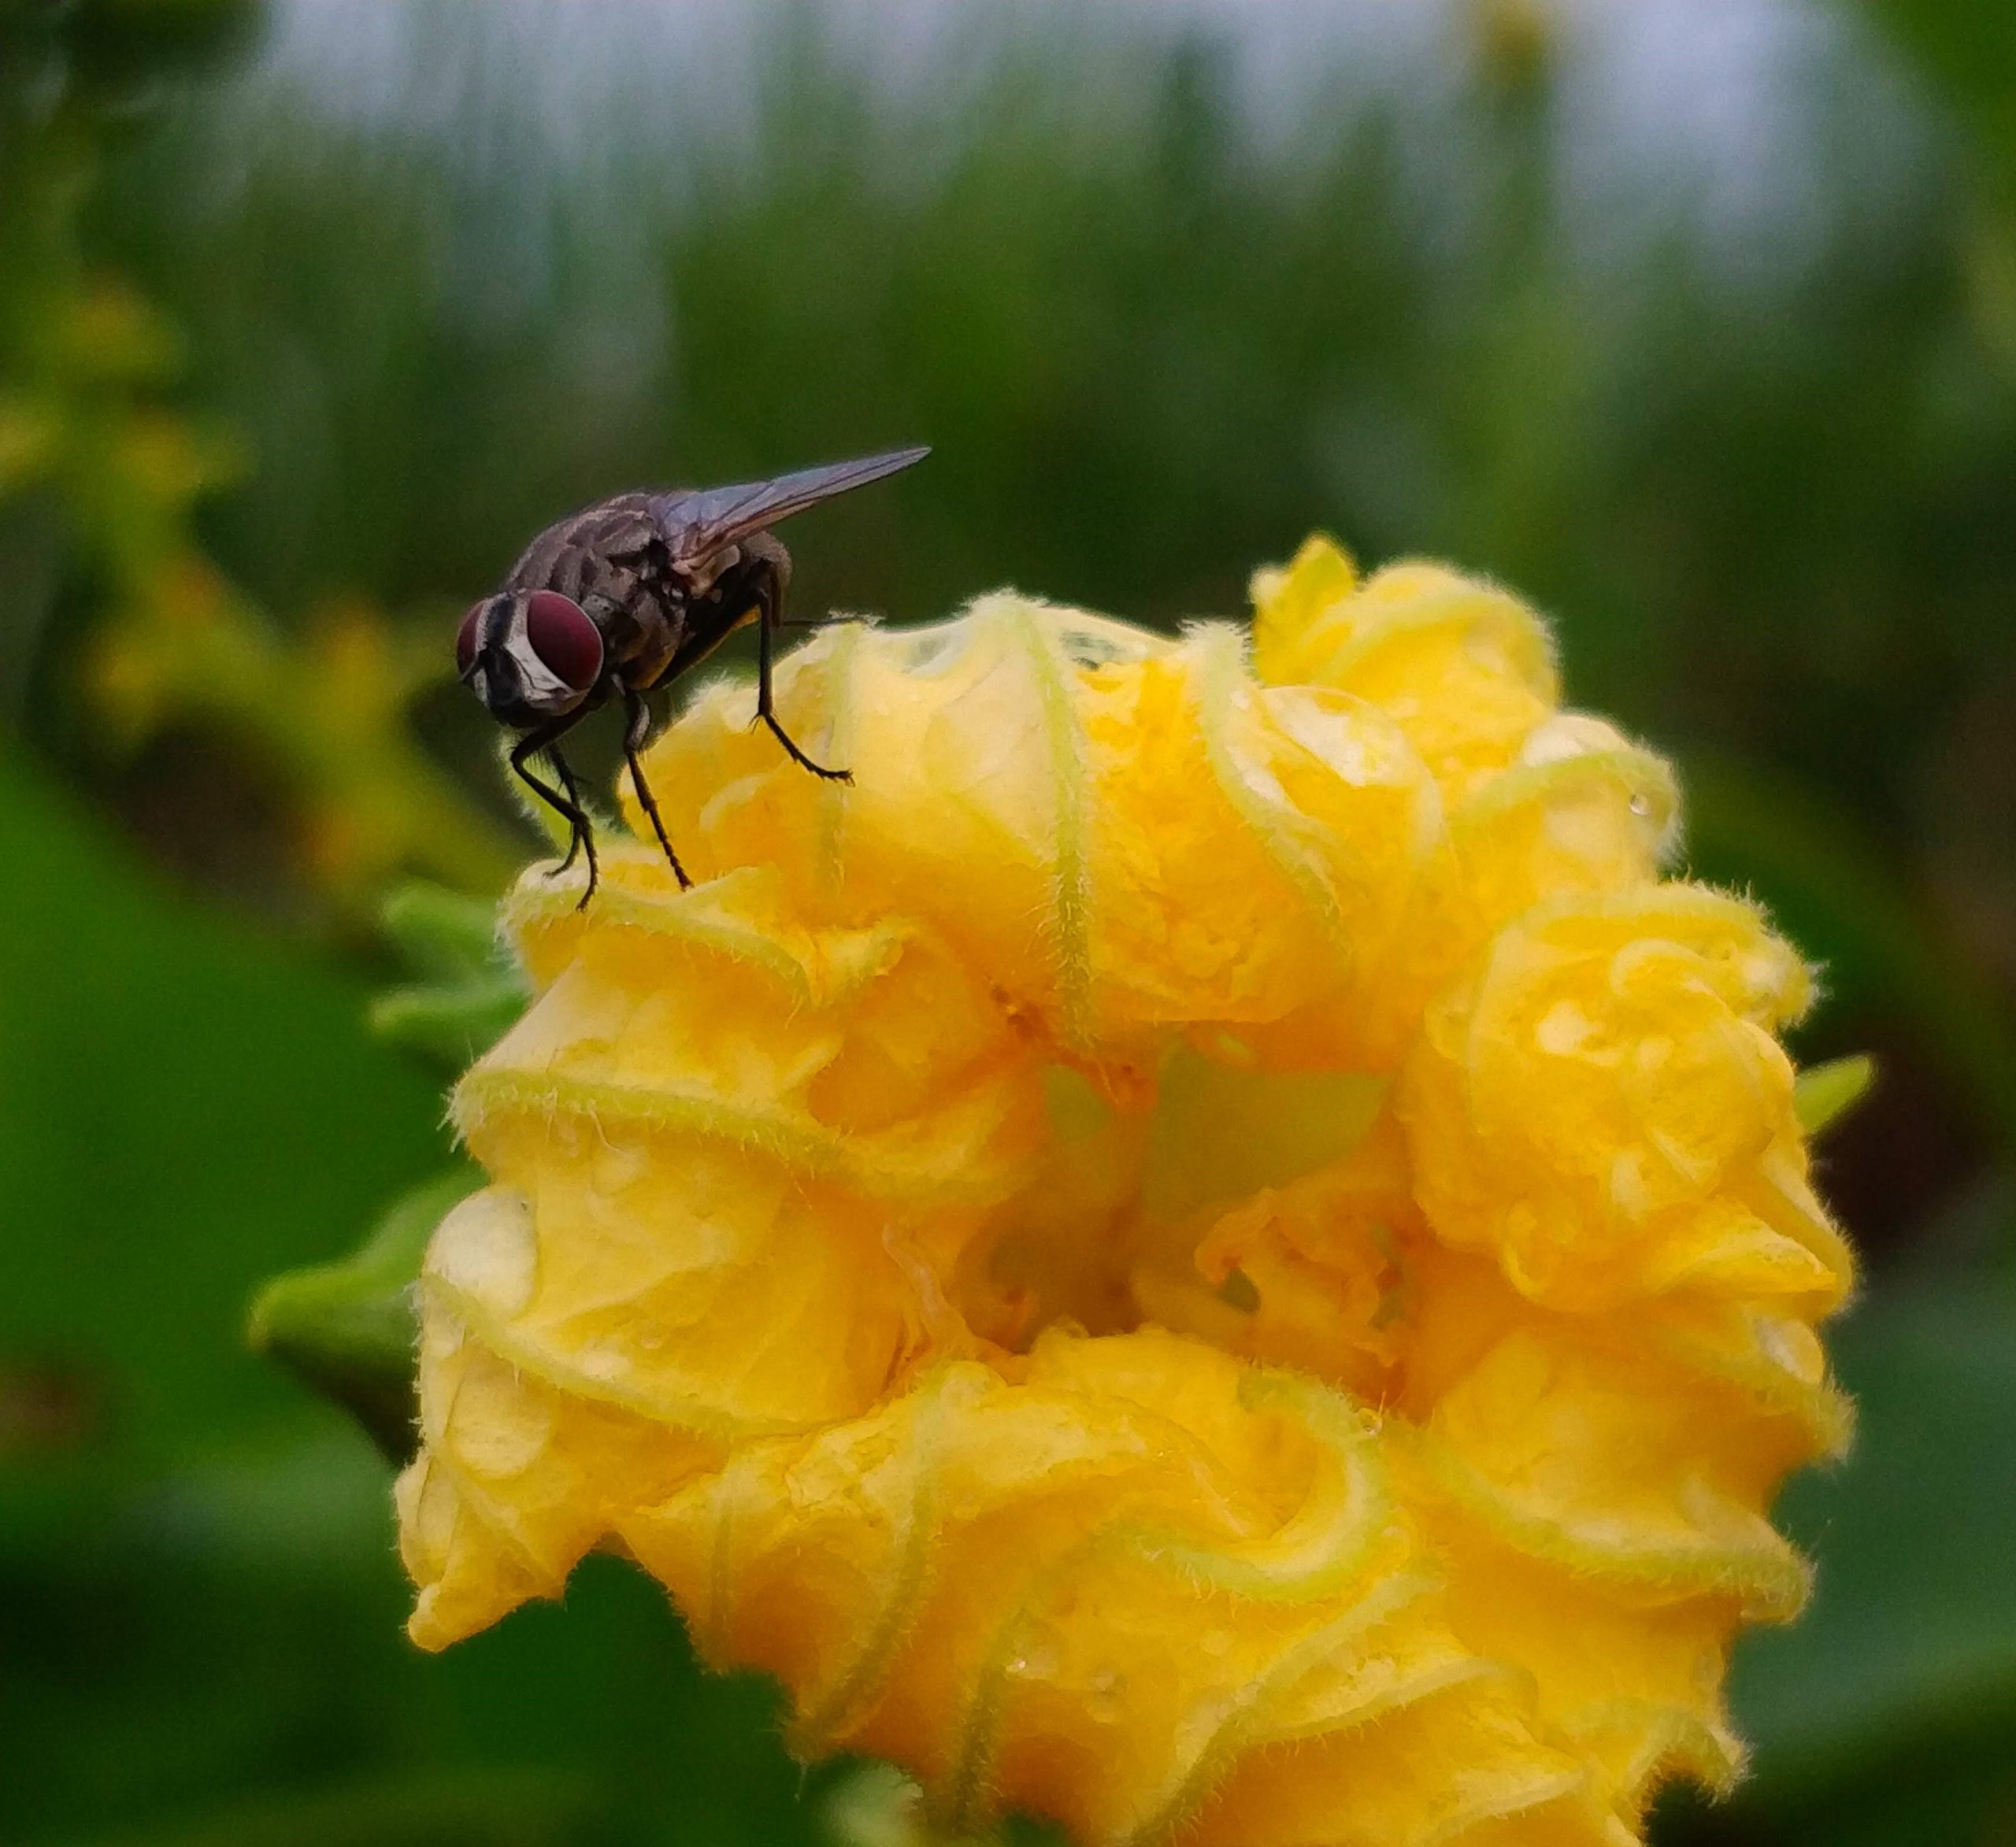 A housefly on a flower